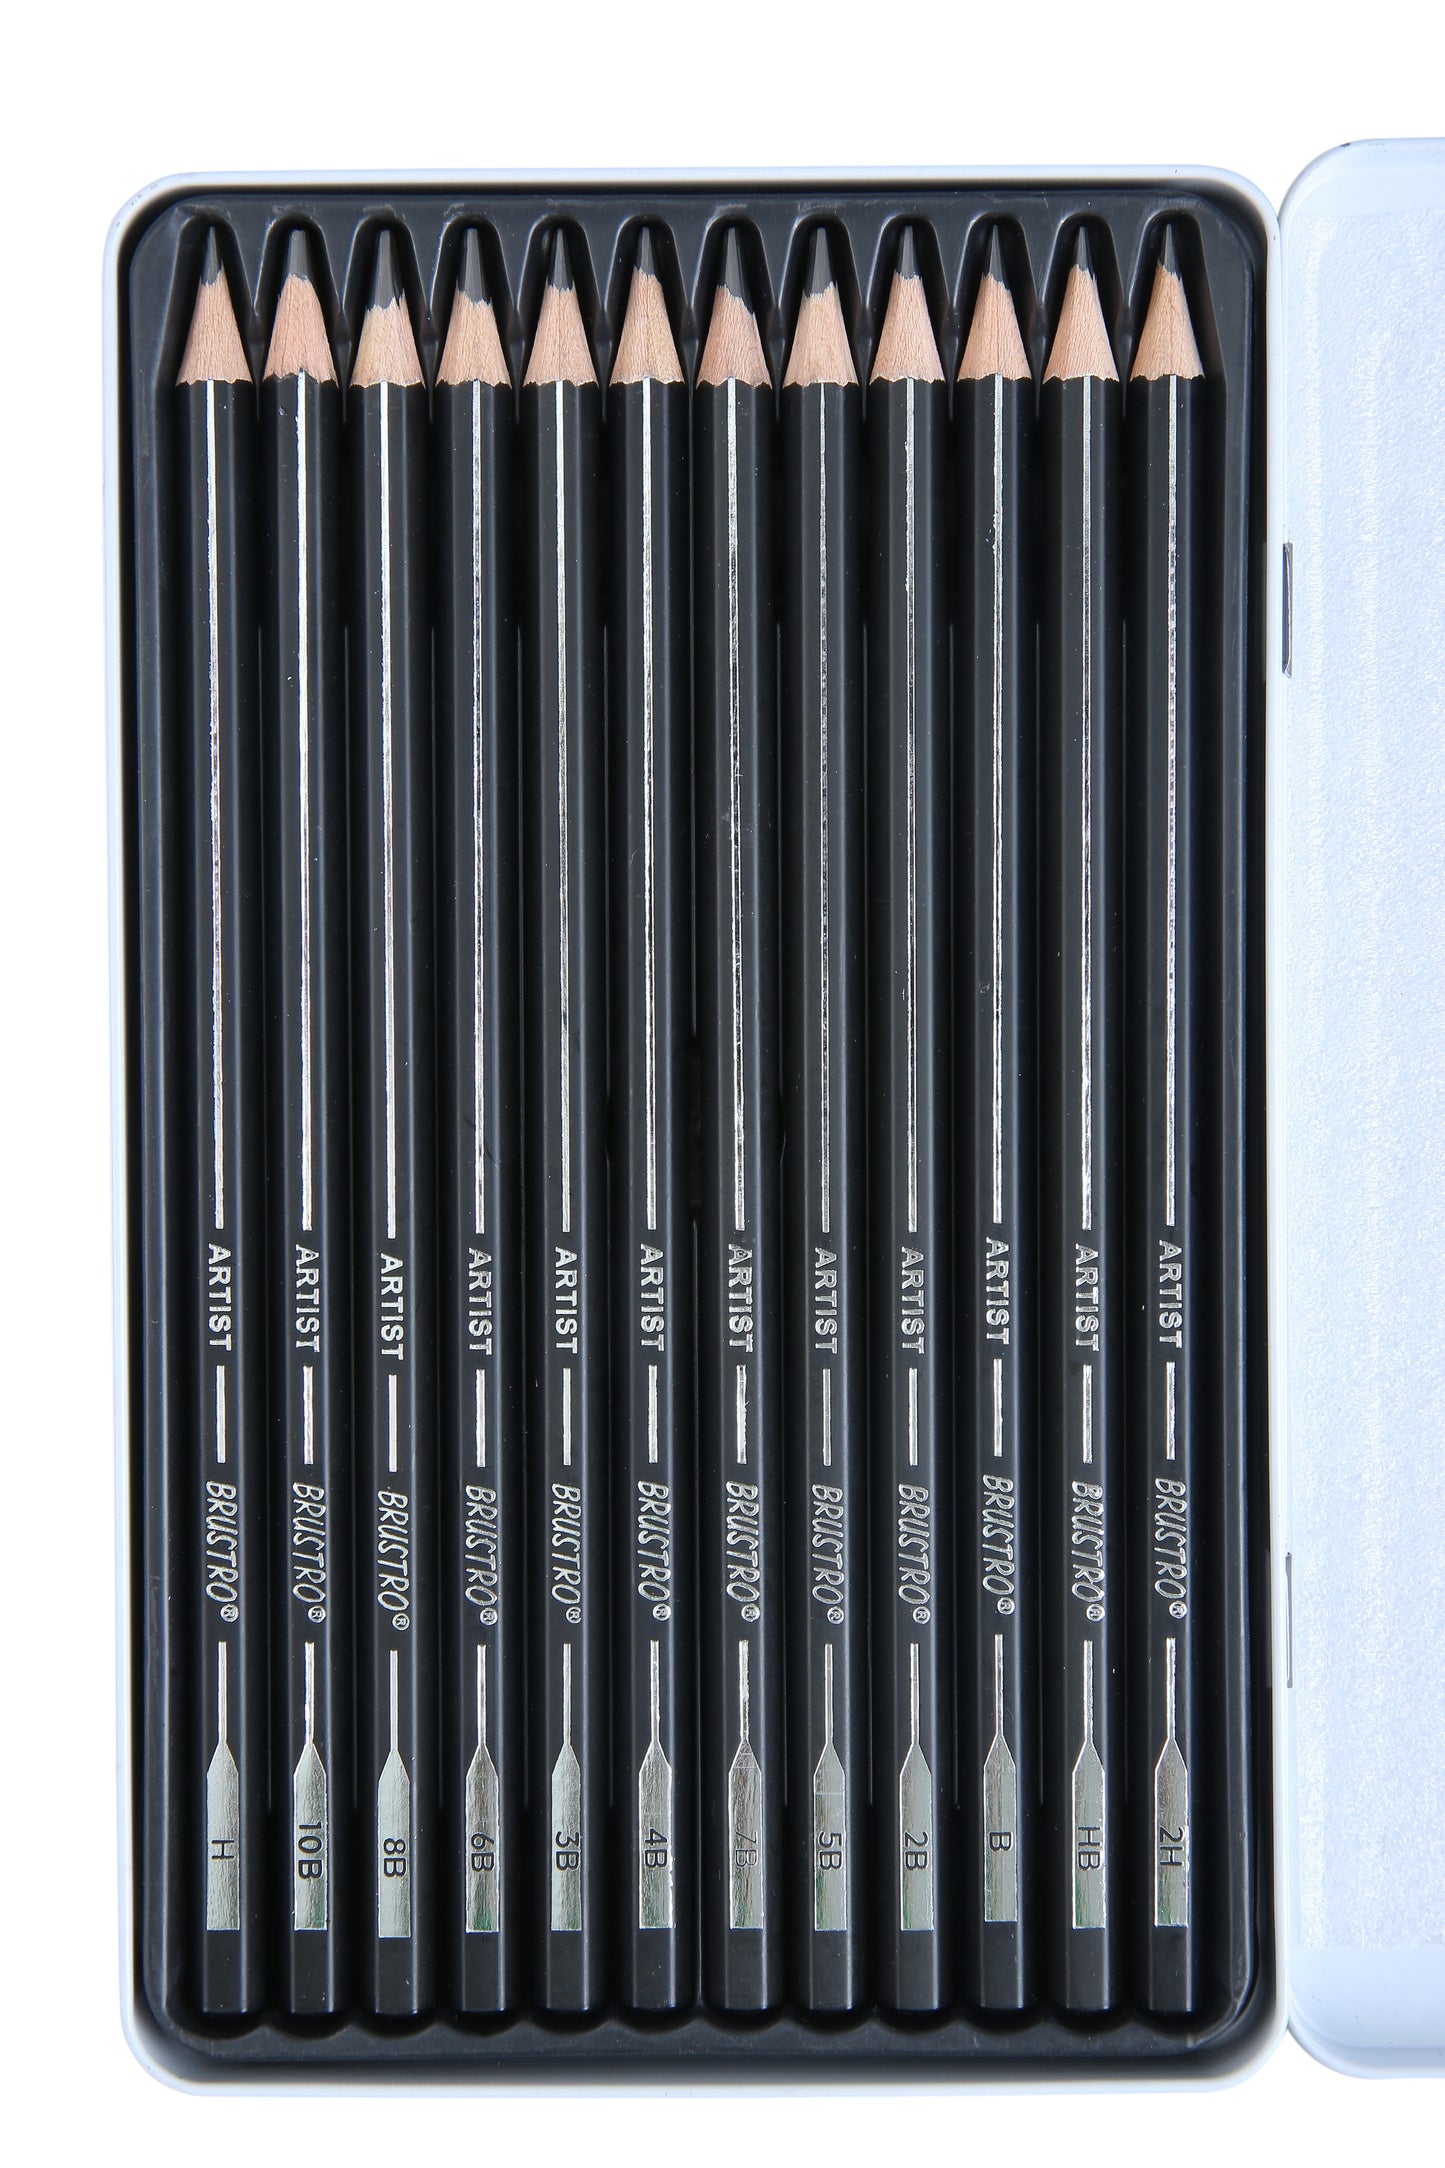 BRUSTRO Artists Fineart Graphite Pencil Set of 12 (10B-2H) with Elegant Tin Box